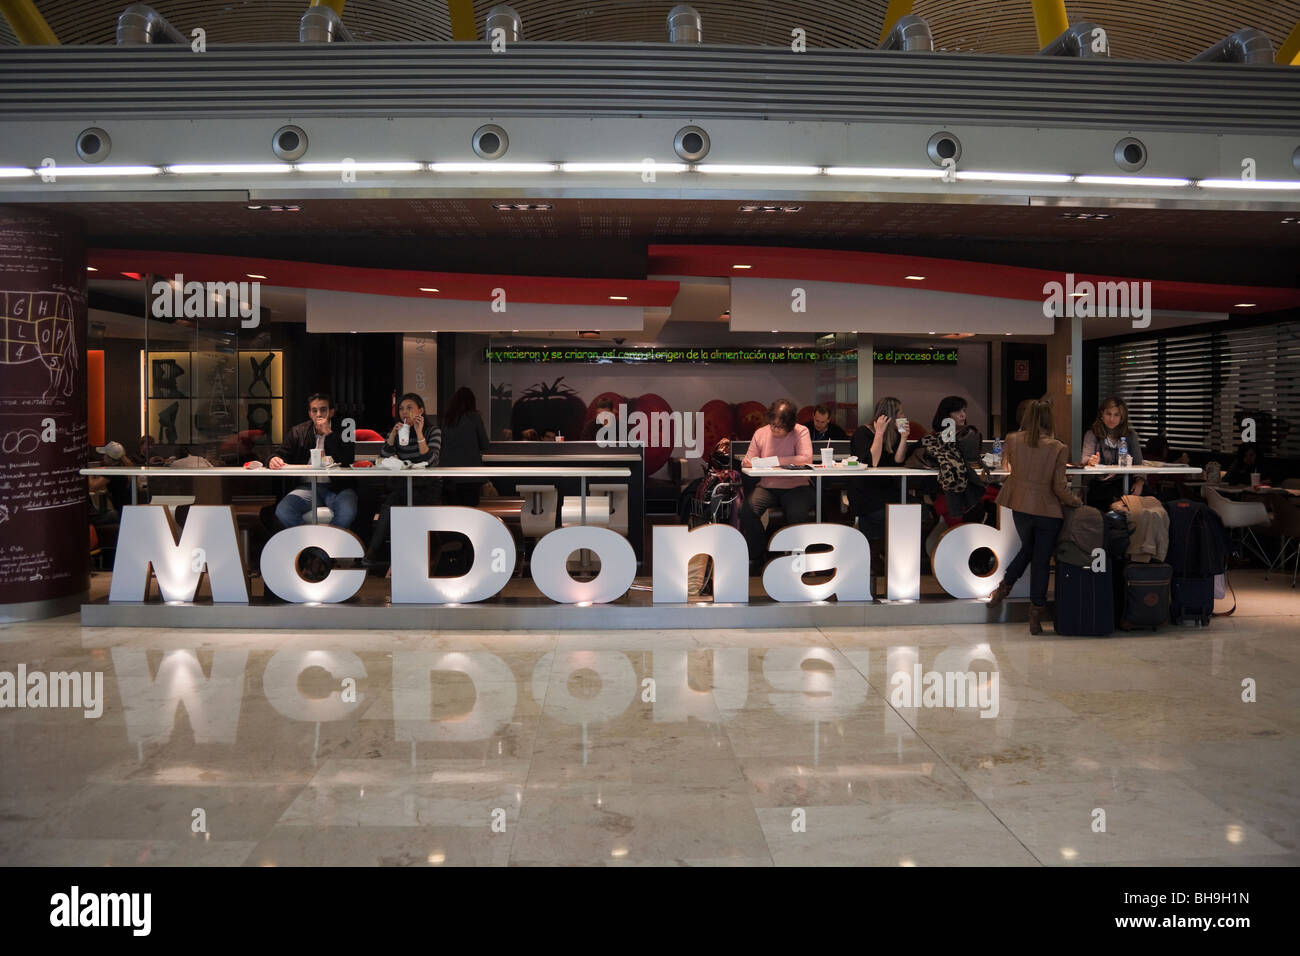 Ristorante McDonalds terminale 4, aeroporto Barajas di Madrid, Spagna Foto Stock